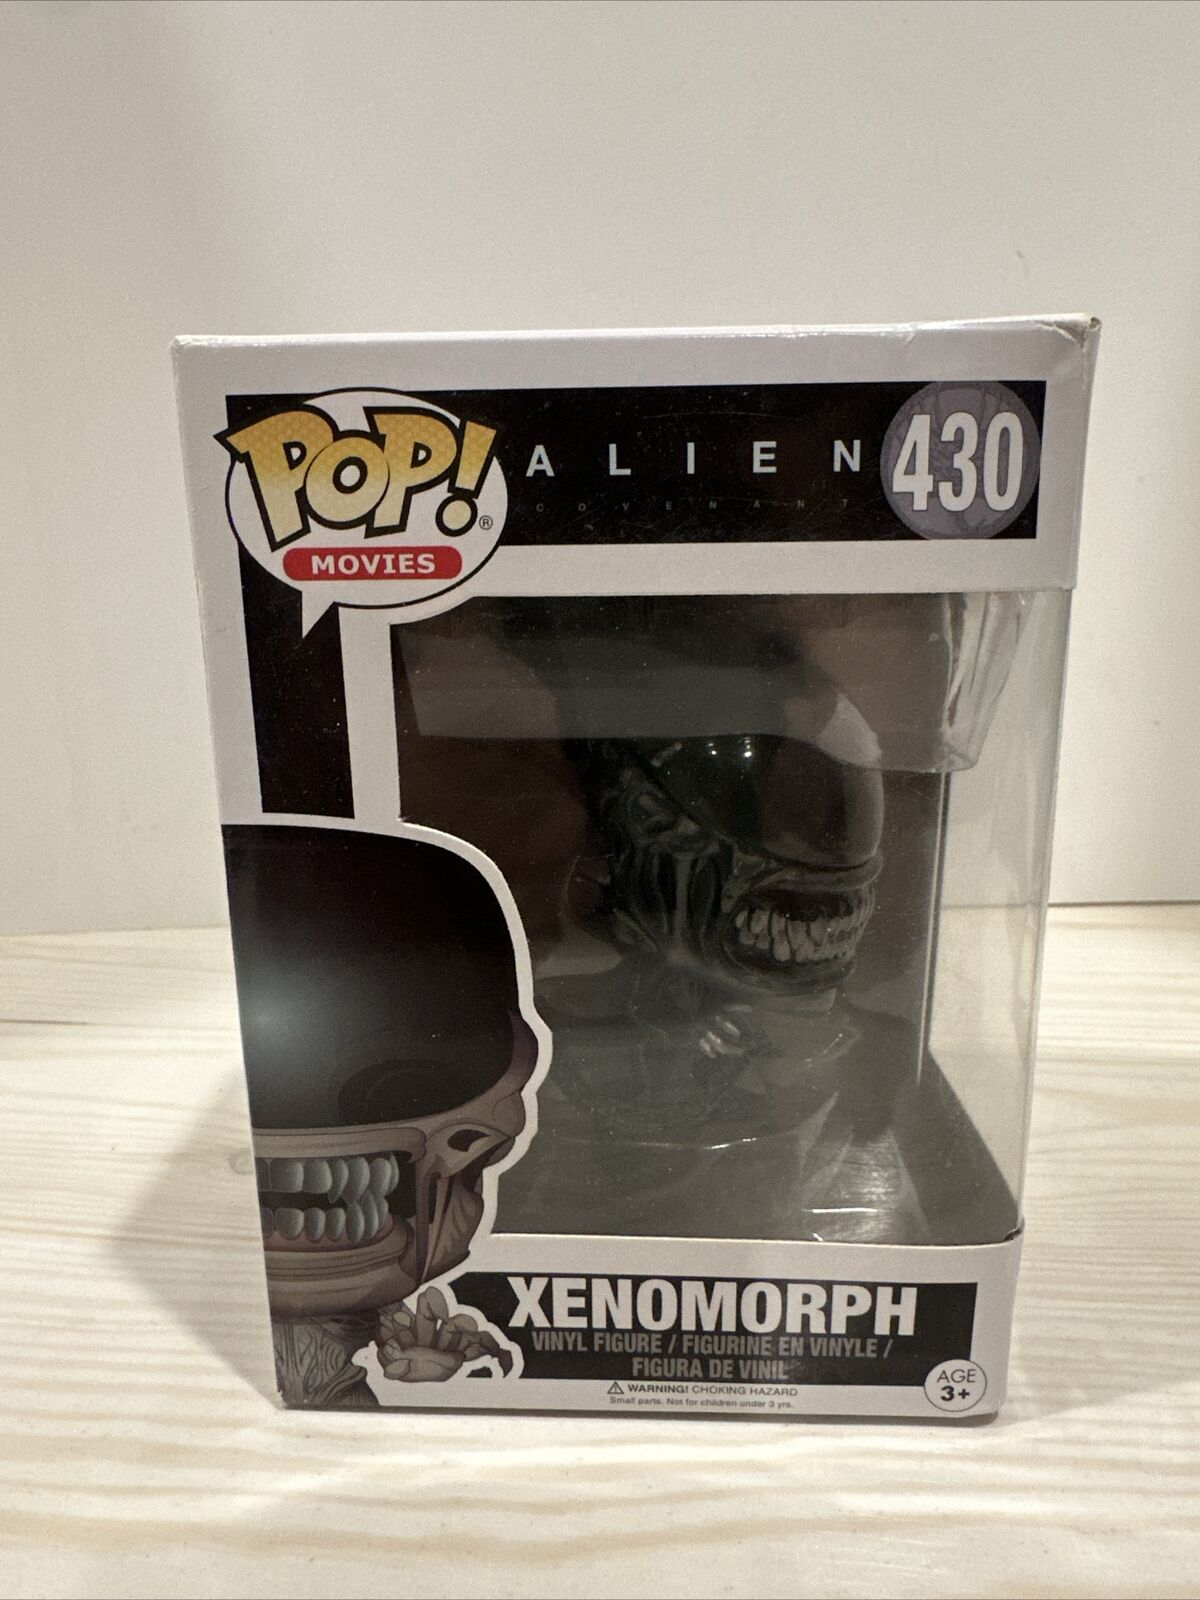 Funko Pop Xenomorph #430 Alien Covenant Horror Movies Vinyl Figure Box Issues